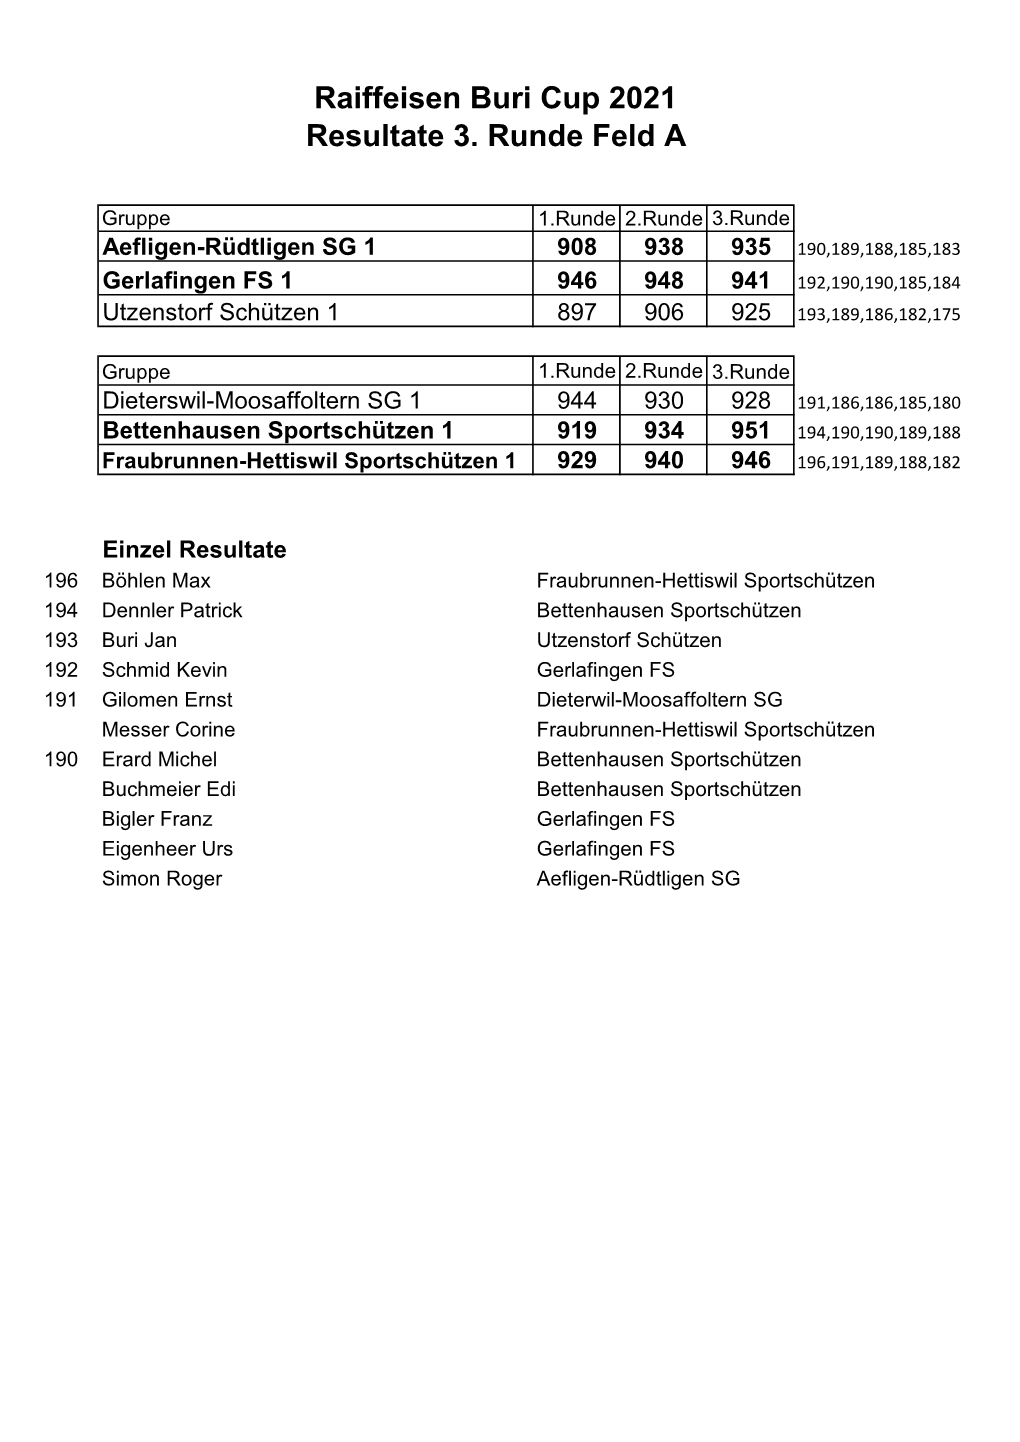 Raiffeisen Buri Cup 2021 Resultate 3. Runde Feld A